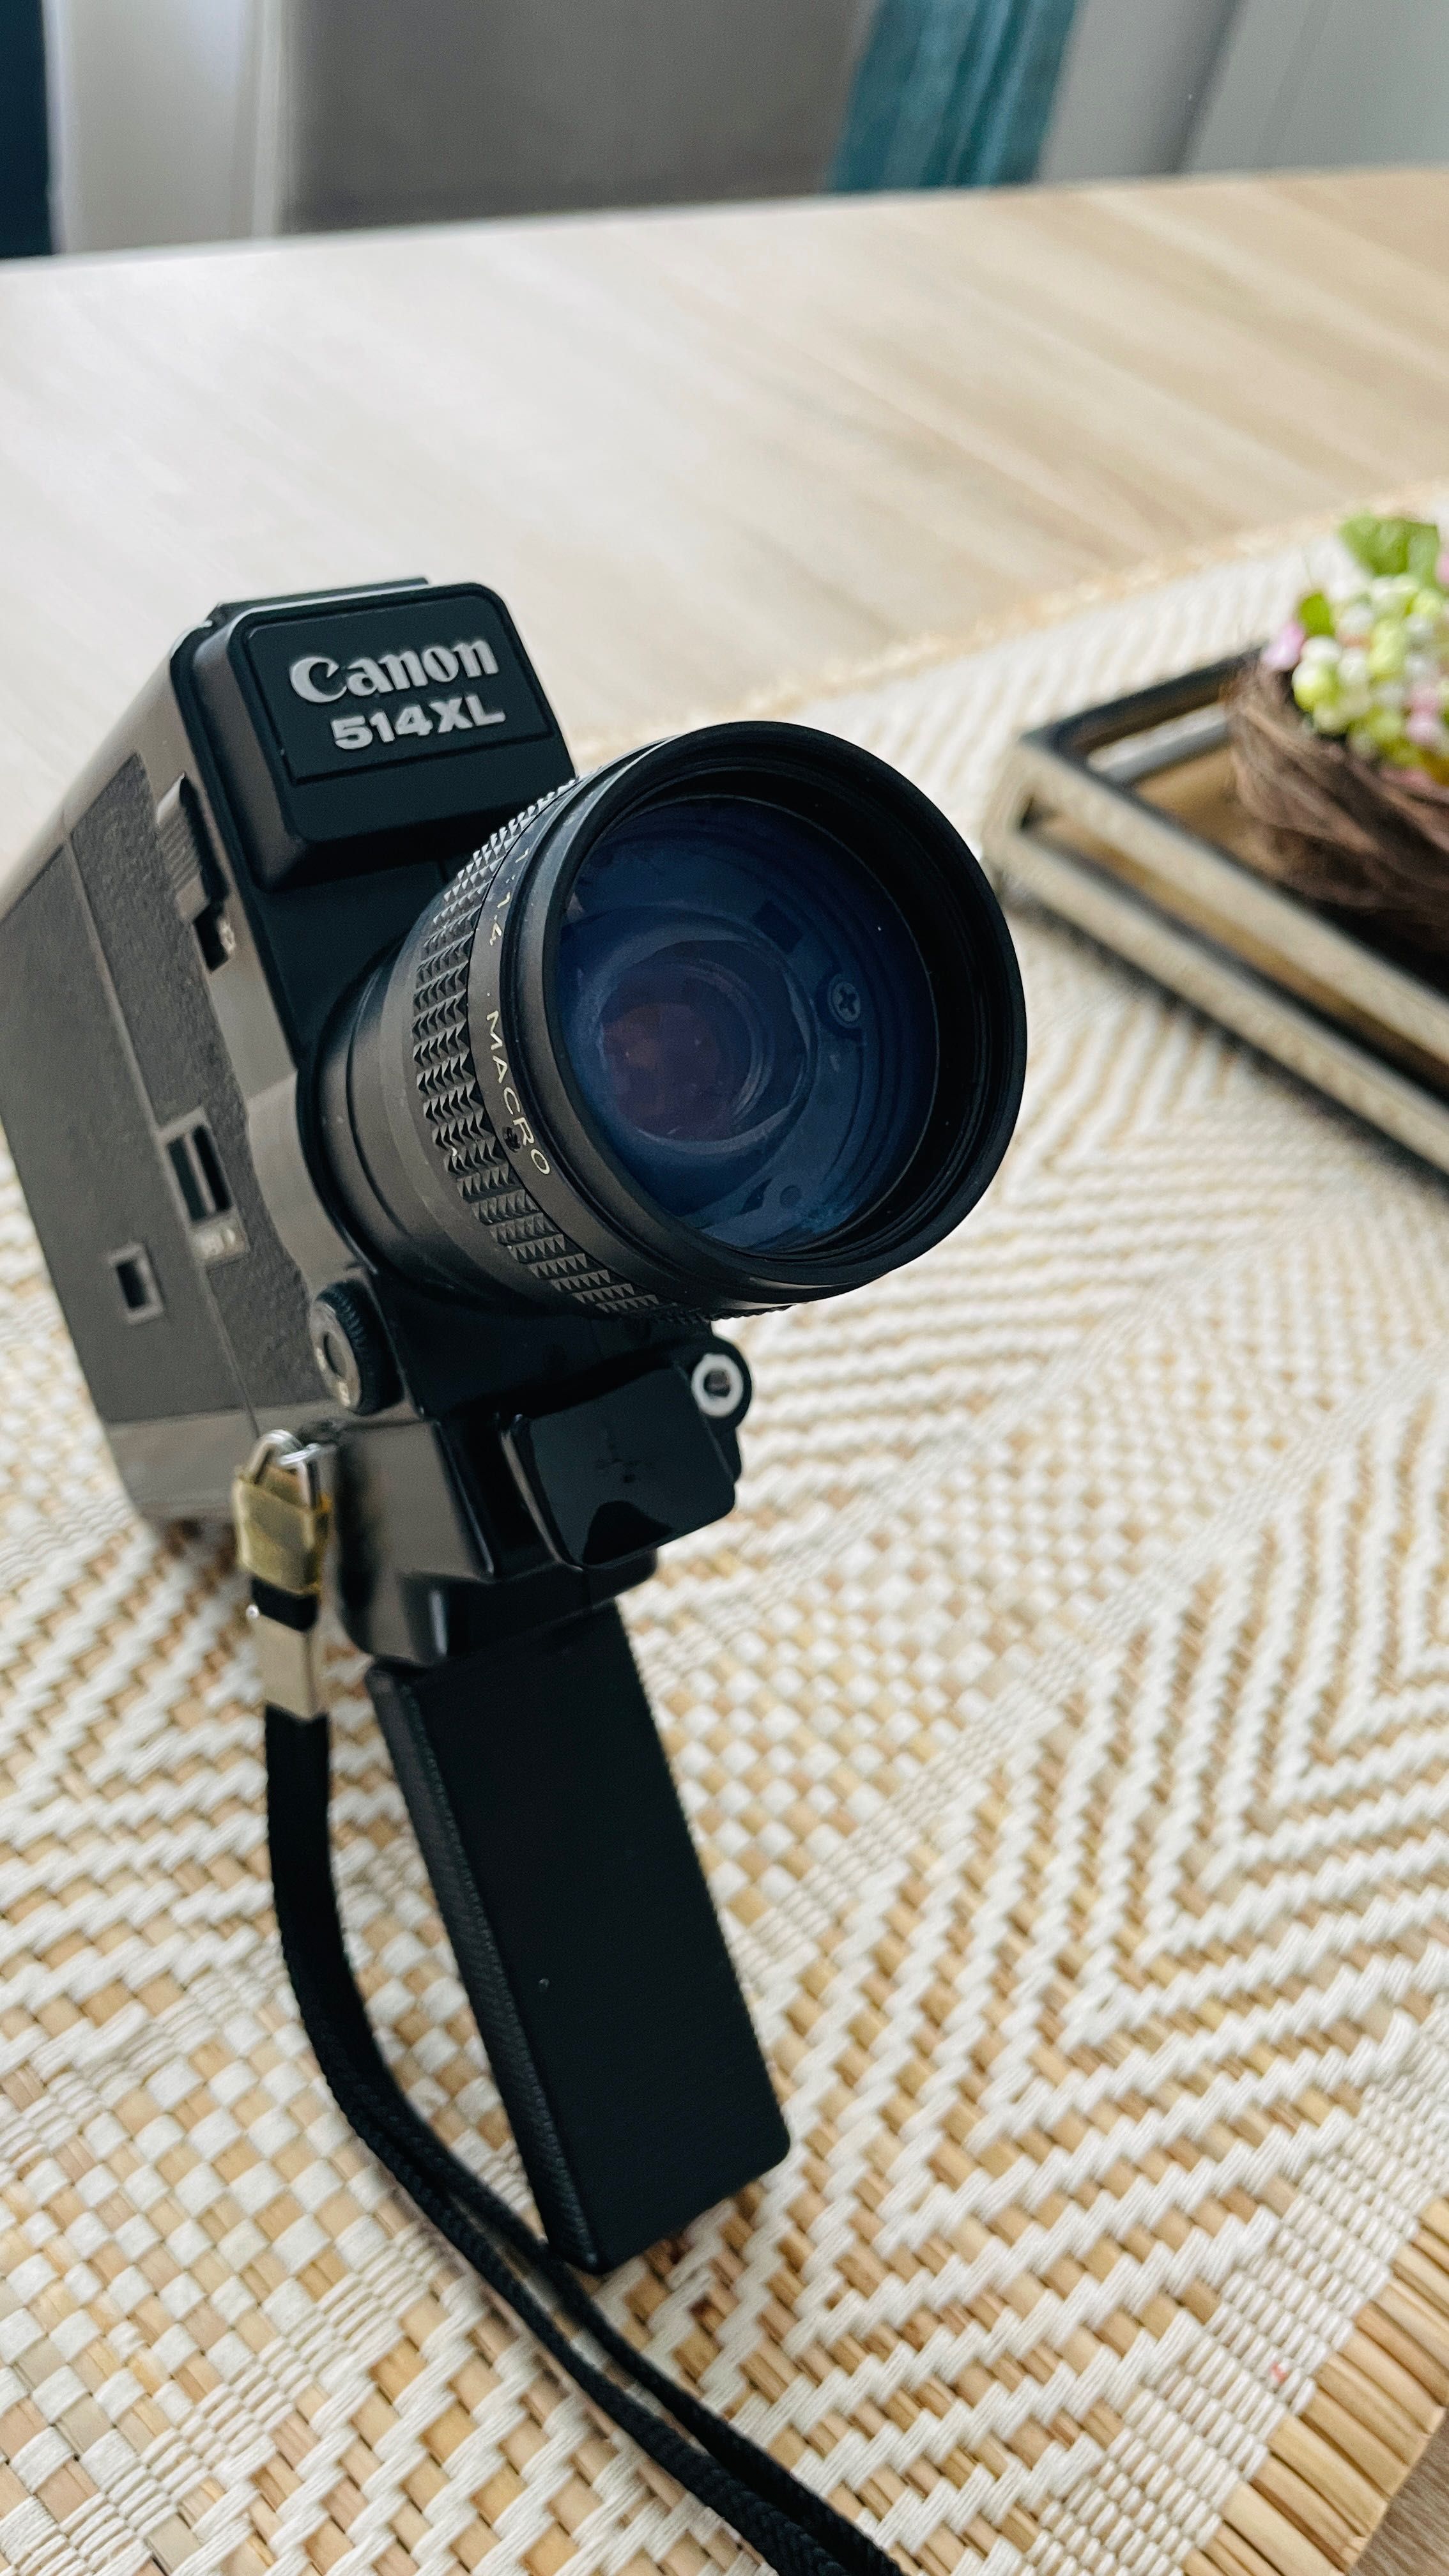 Canon 514 XL Super 8 cinema camera, testat foto video vintage